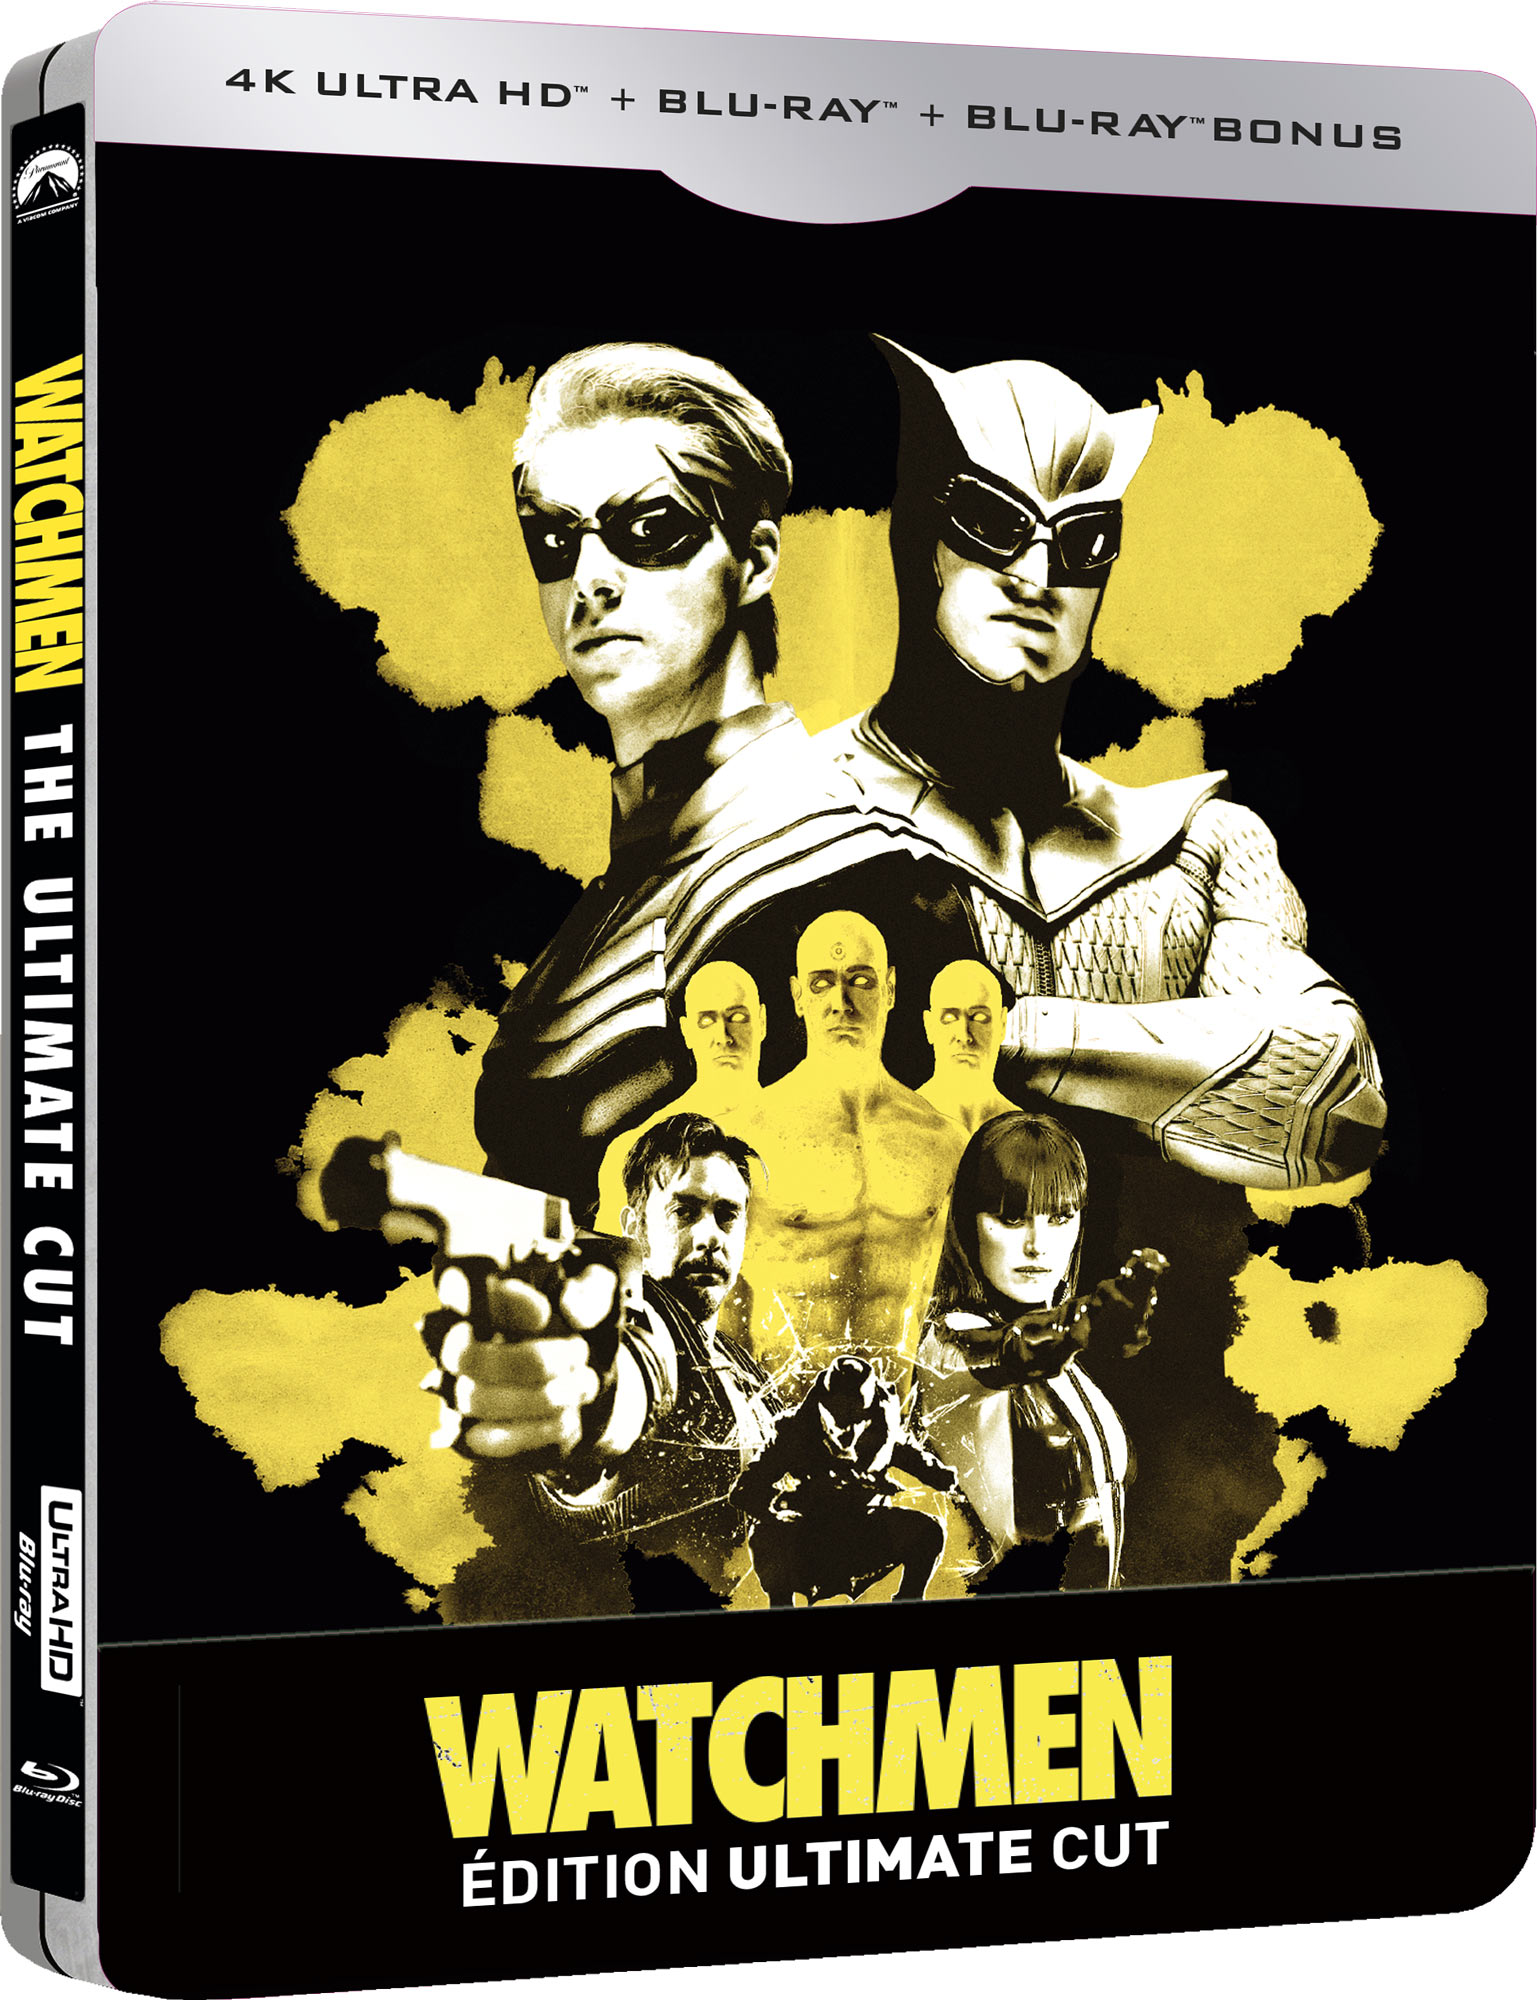 Watchmen - Ultimate Cut - SteelBook 4K Ultra HD + Blu-ray + Blu-ray bonus + goodies